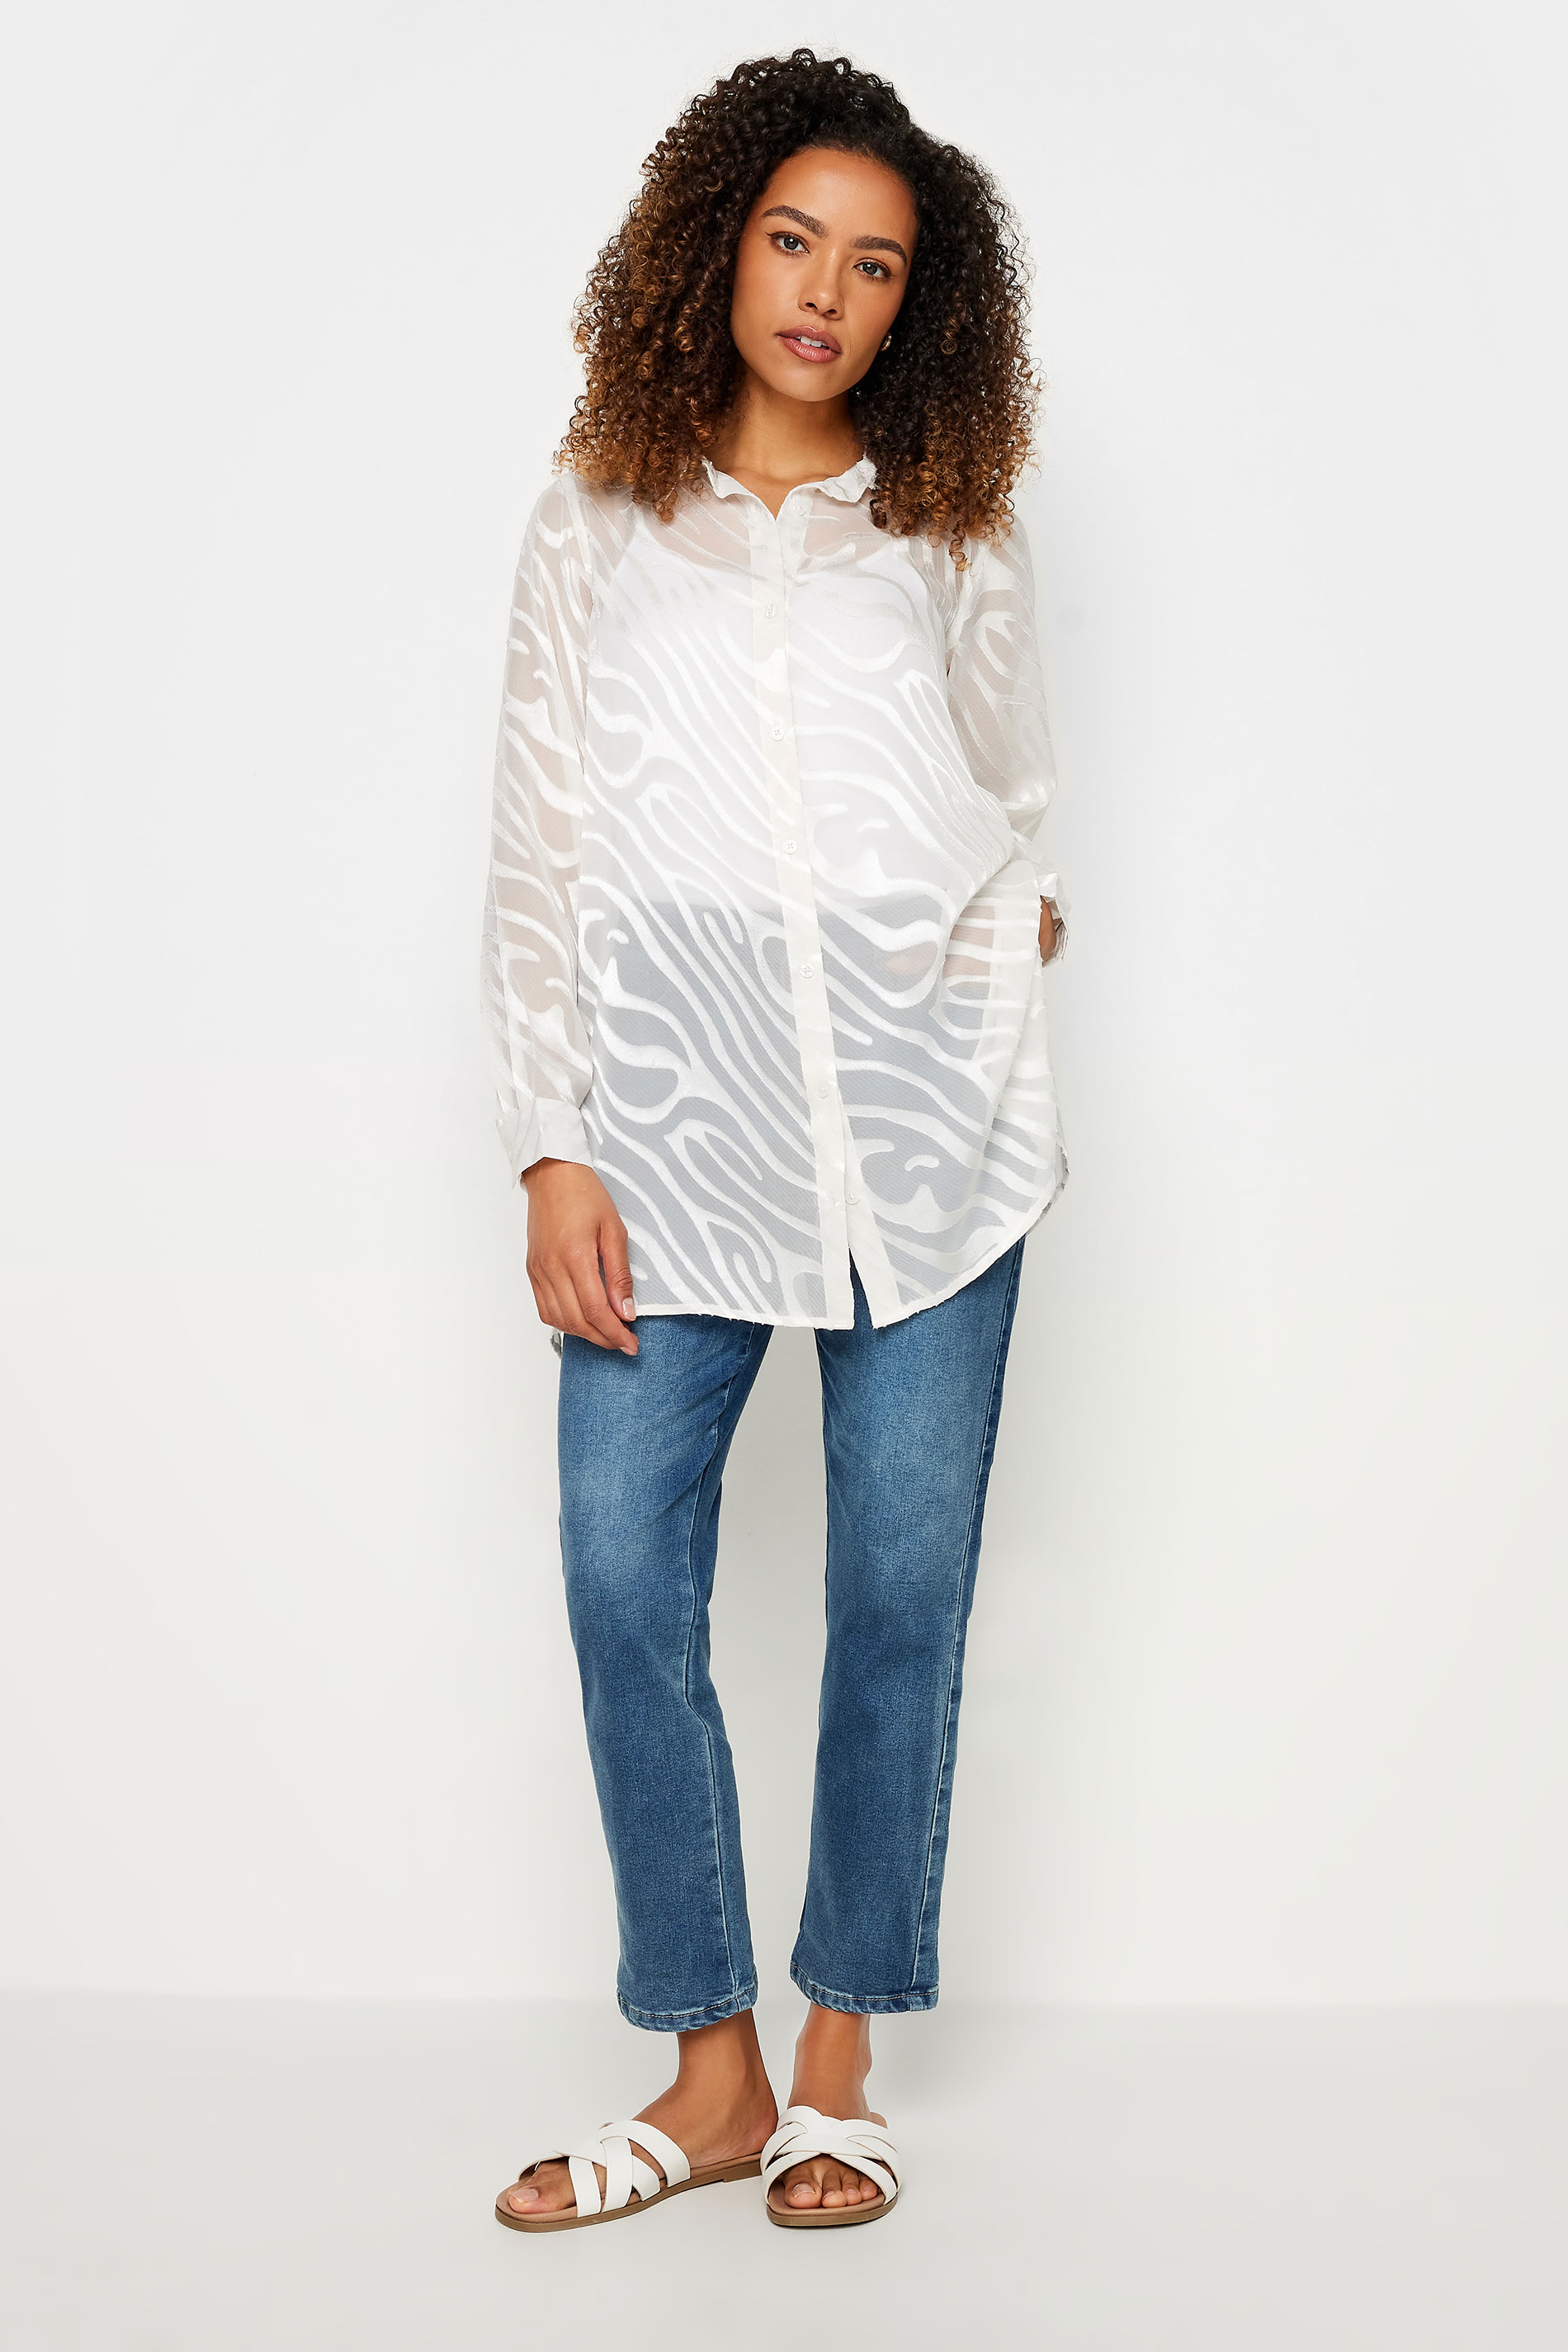 M&Co White Zebra Print Long Sleeve Mesh Shirt | M&Co 2